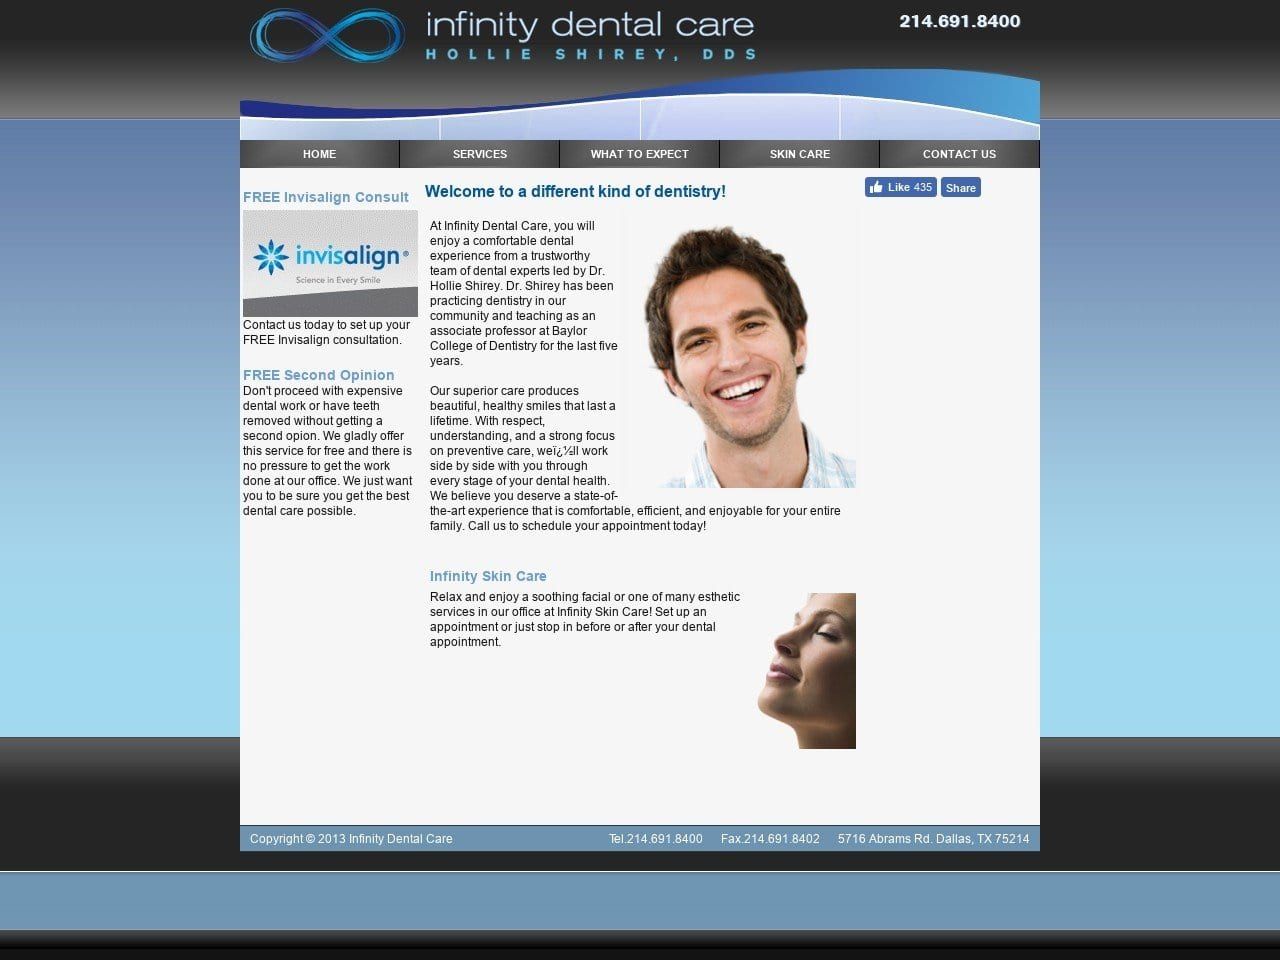 Infinity Dental Care Website Screenshot from infinitydentalcare.net